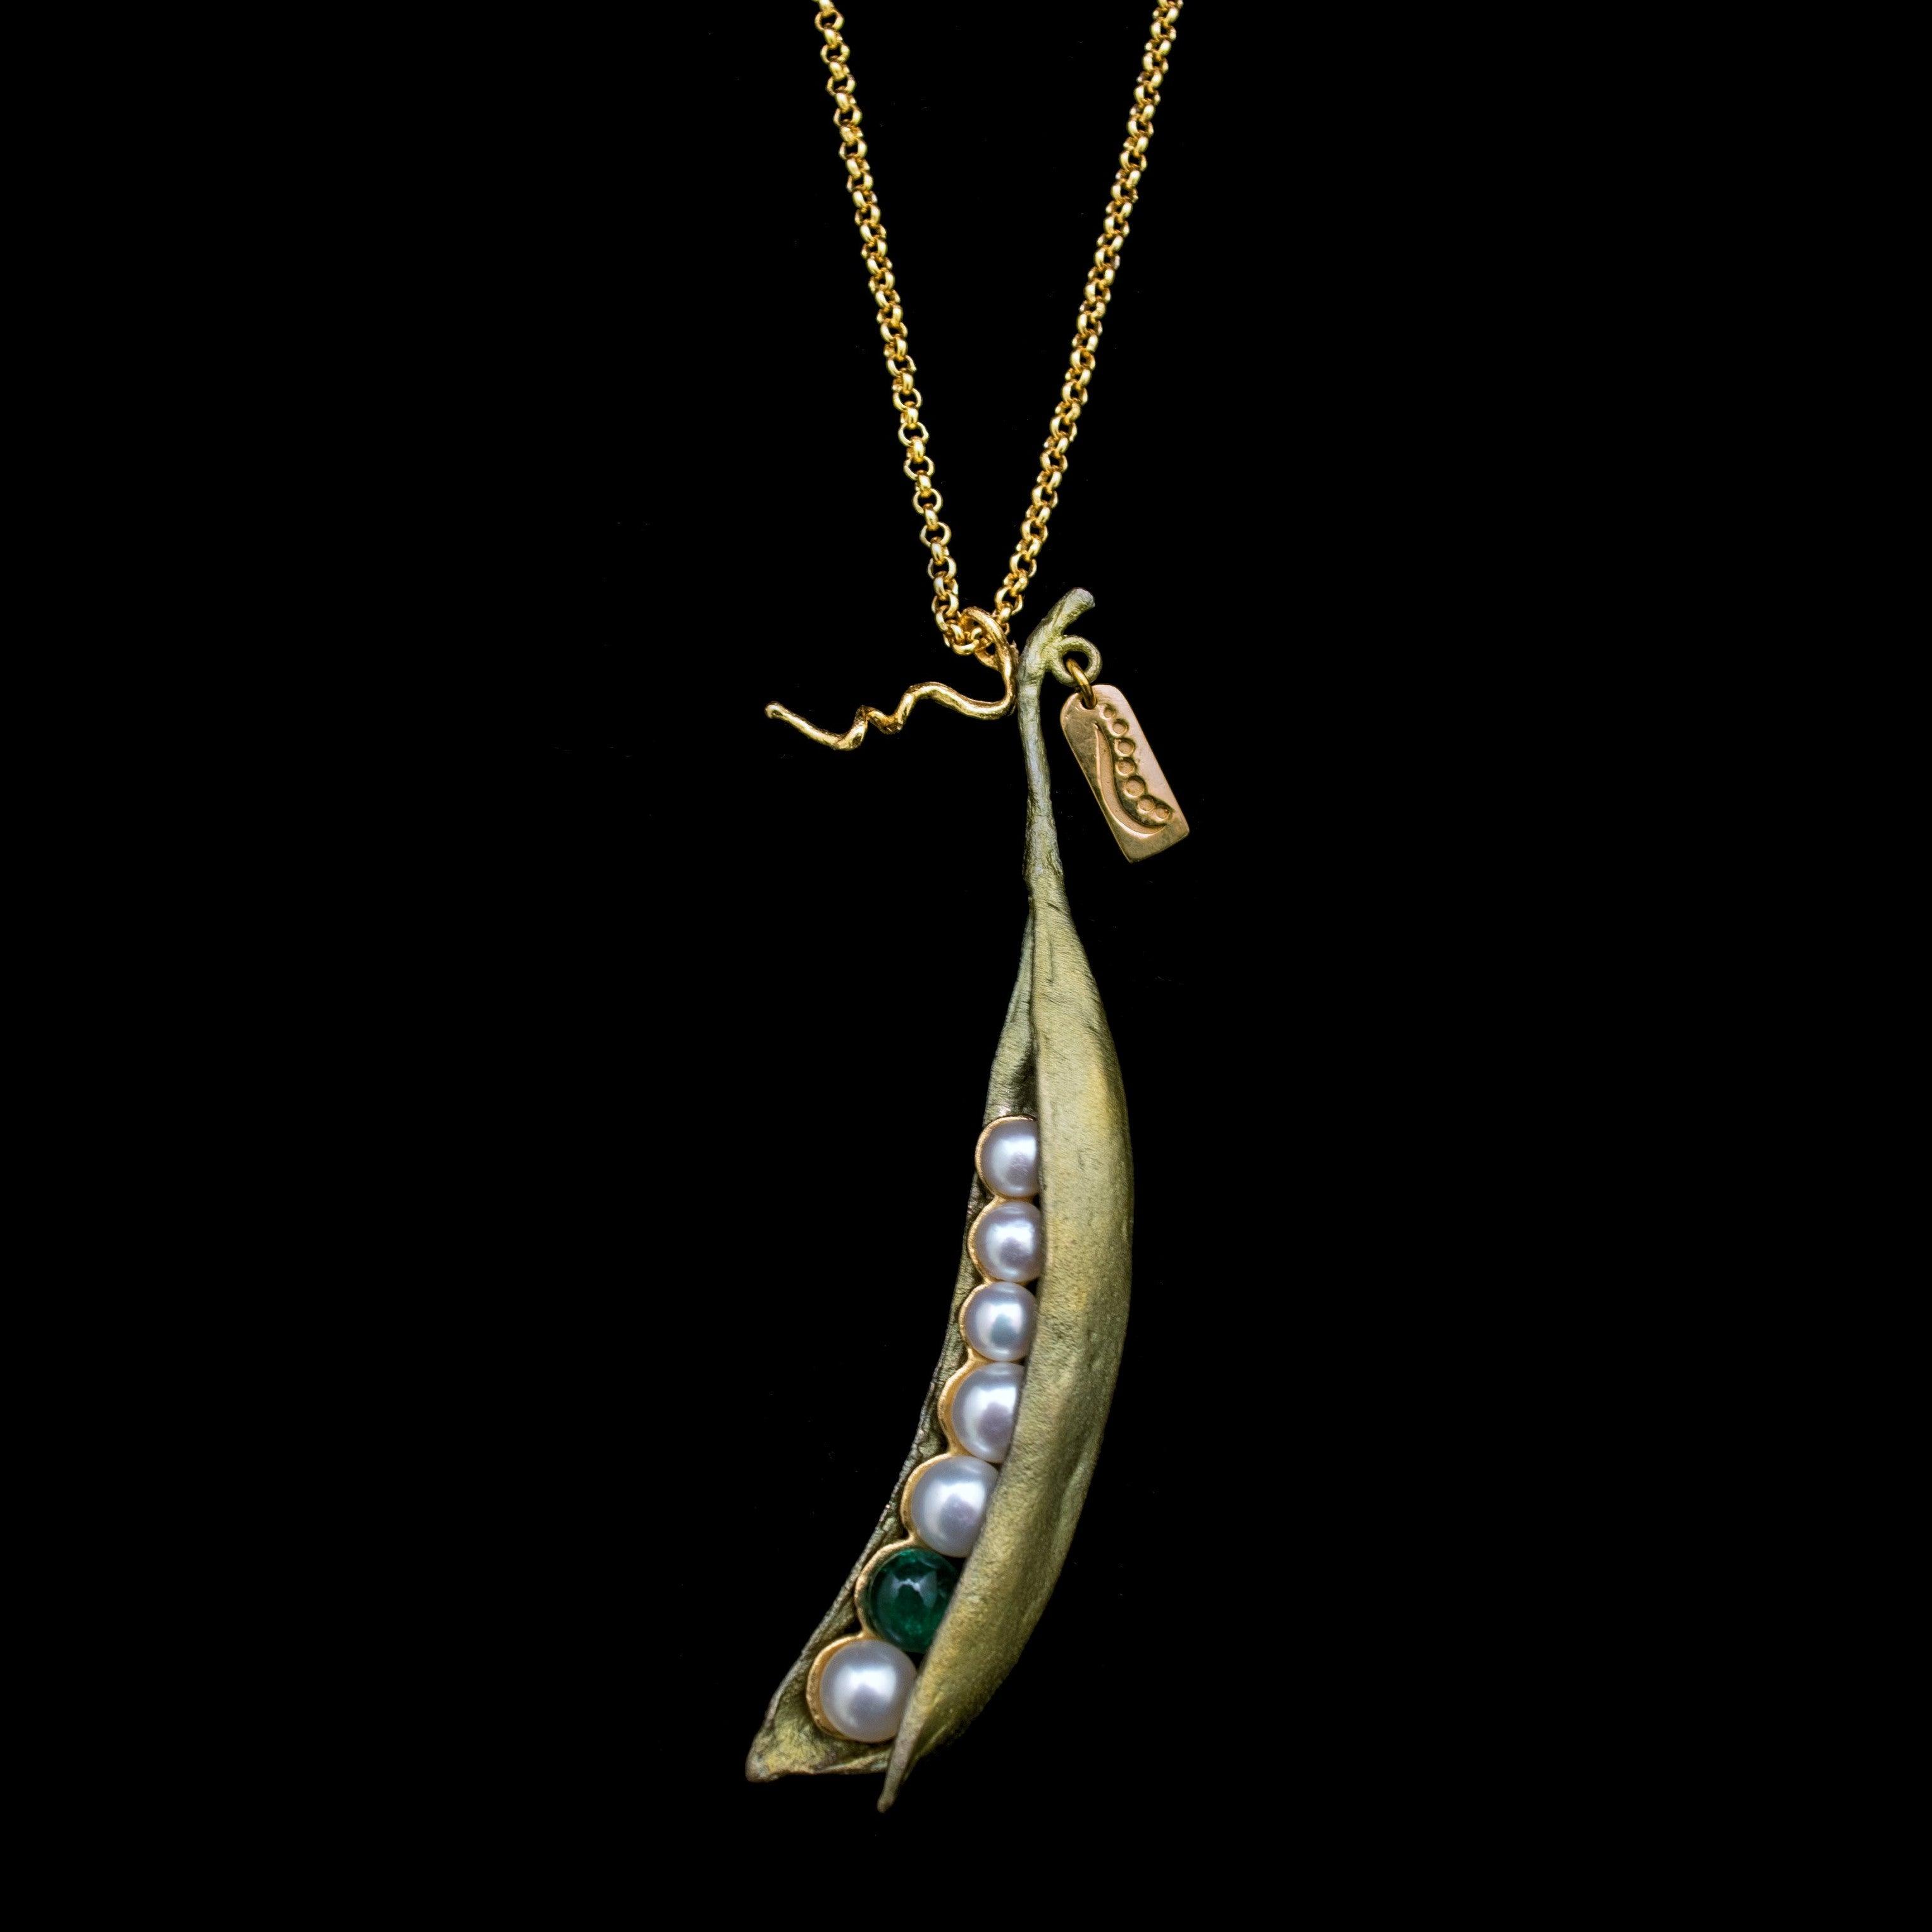 Pea Pod Pendant - Emerald with 6 Pearls